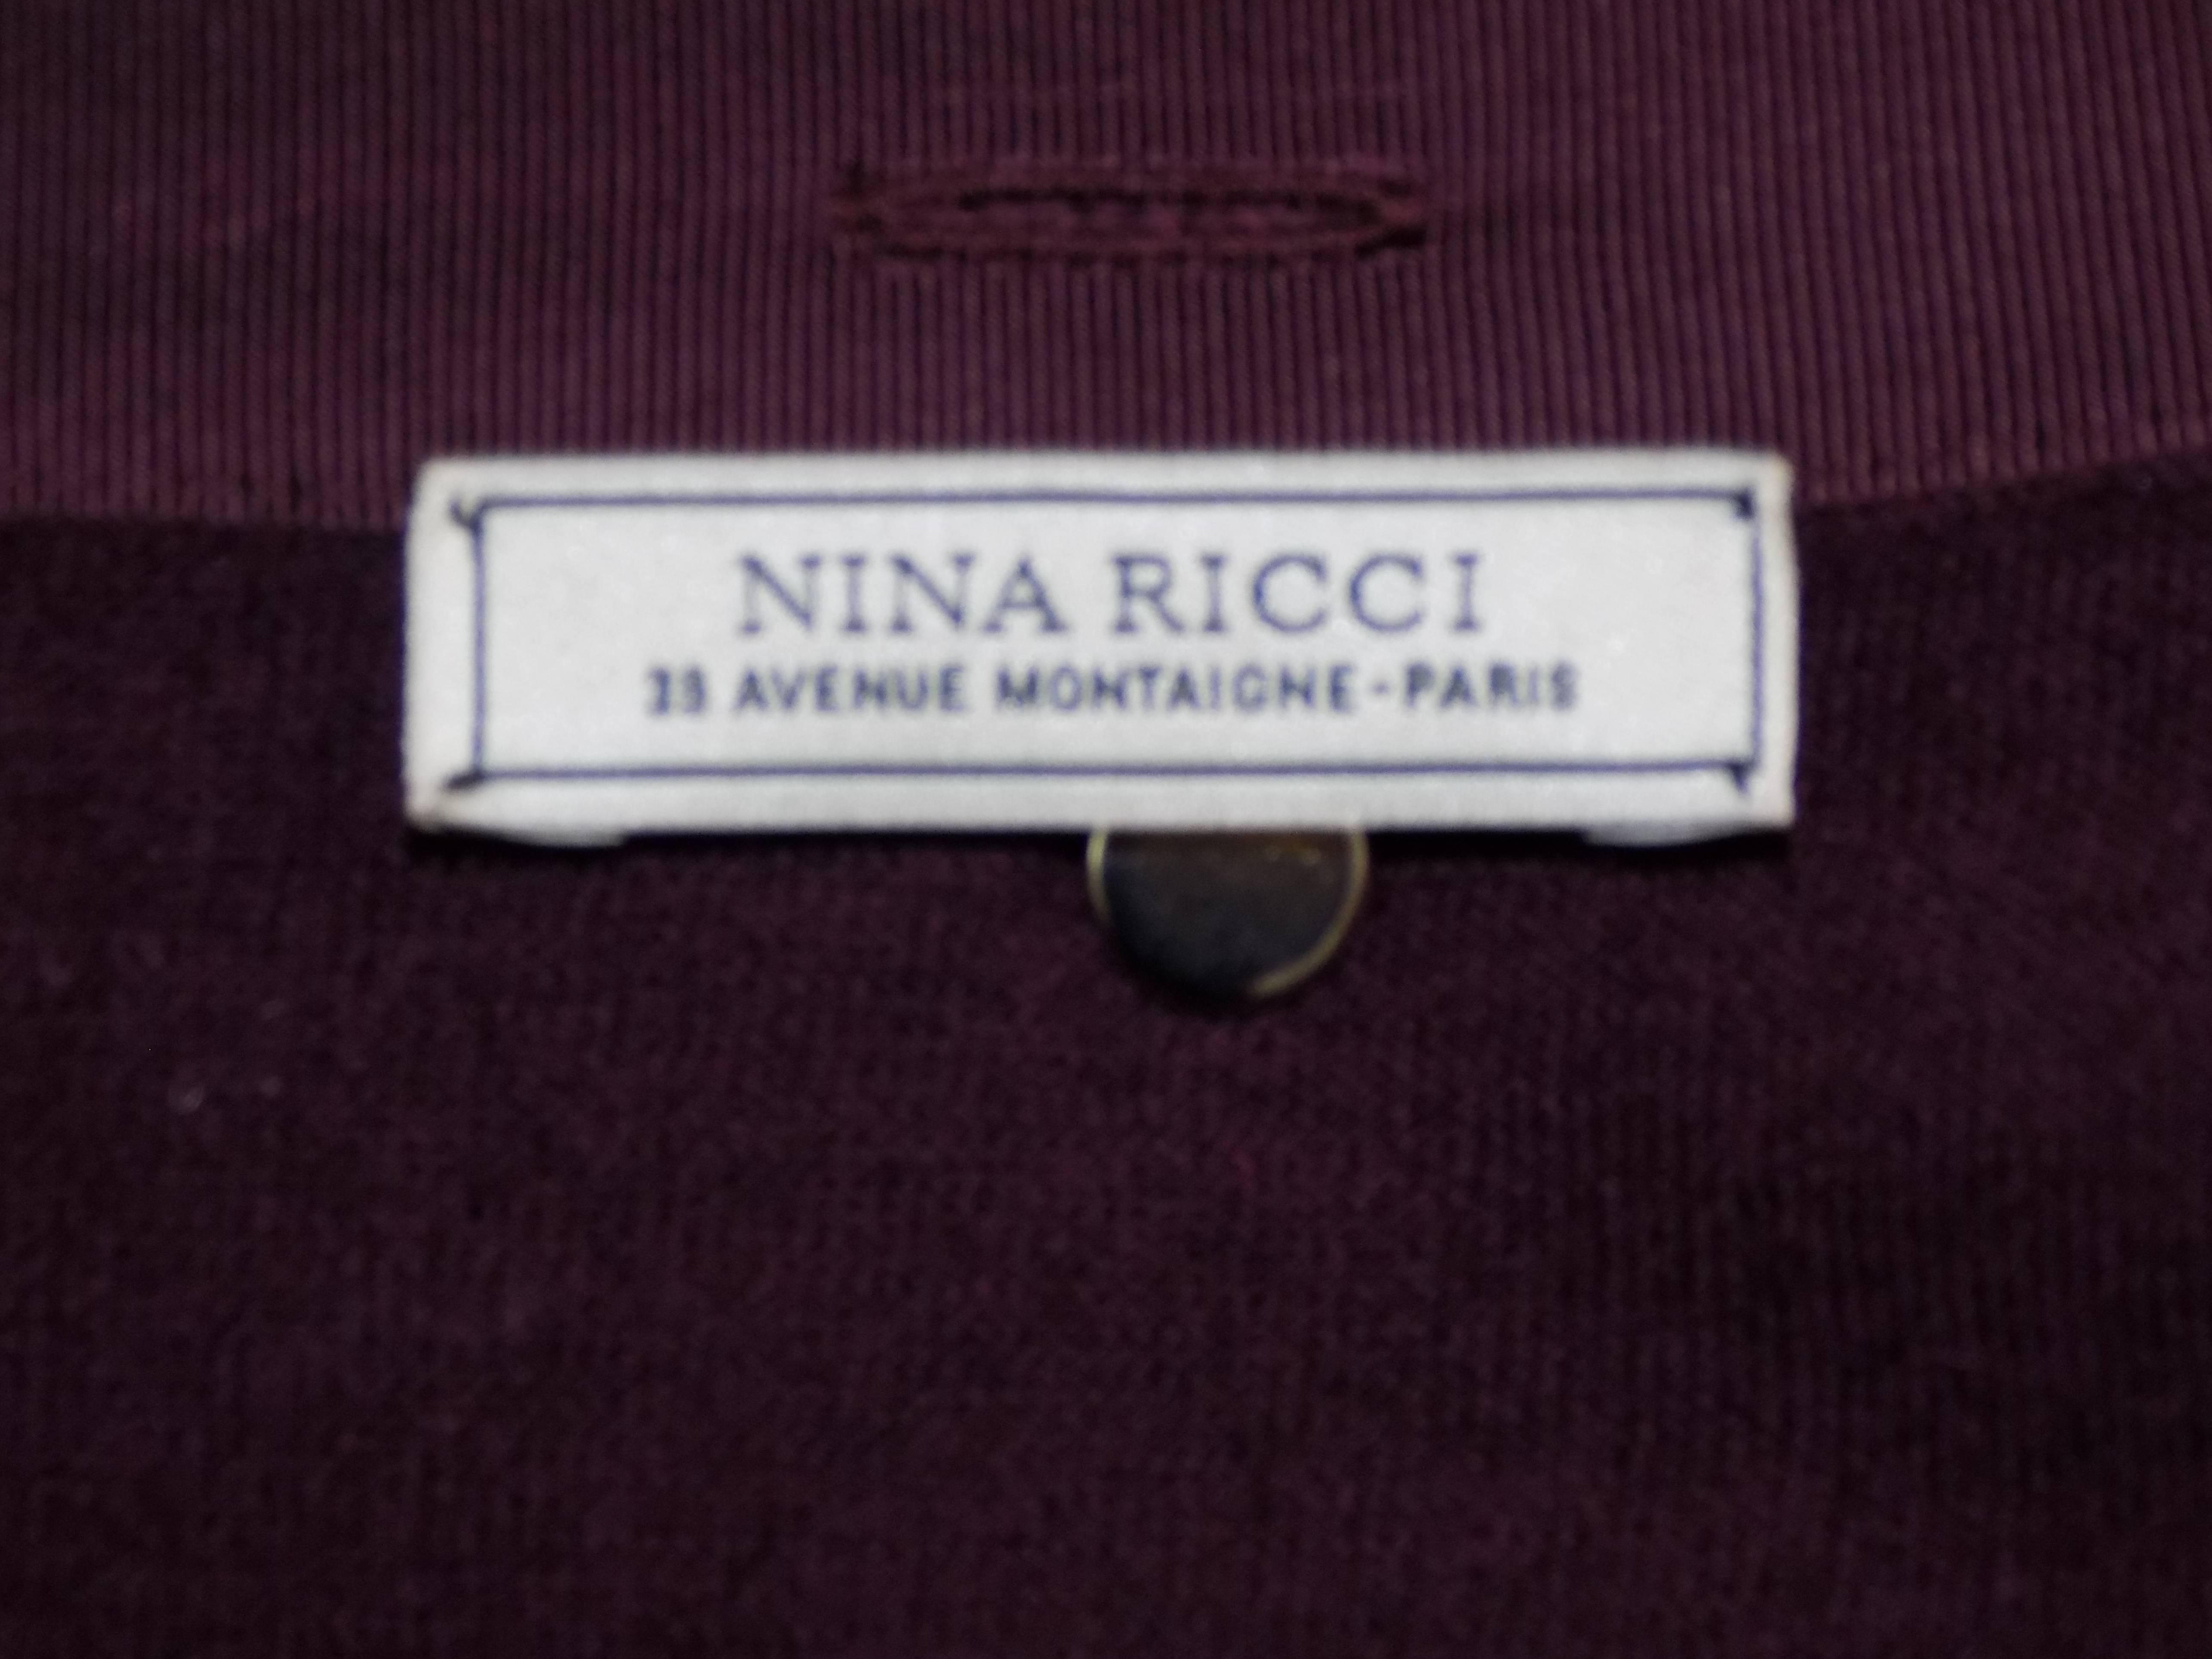 Nina Ricci silk and cashmere sweater set jaket/ top                            1